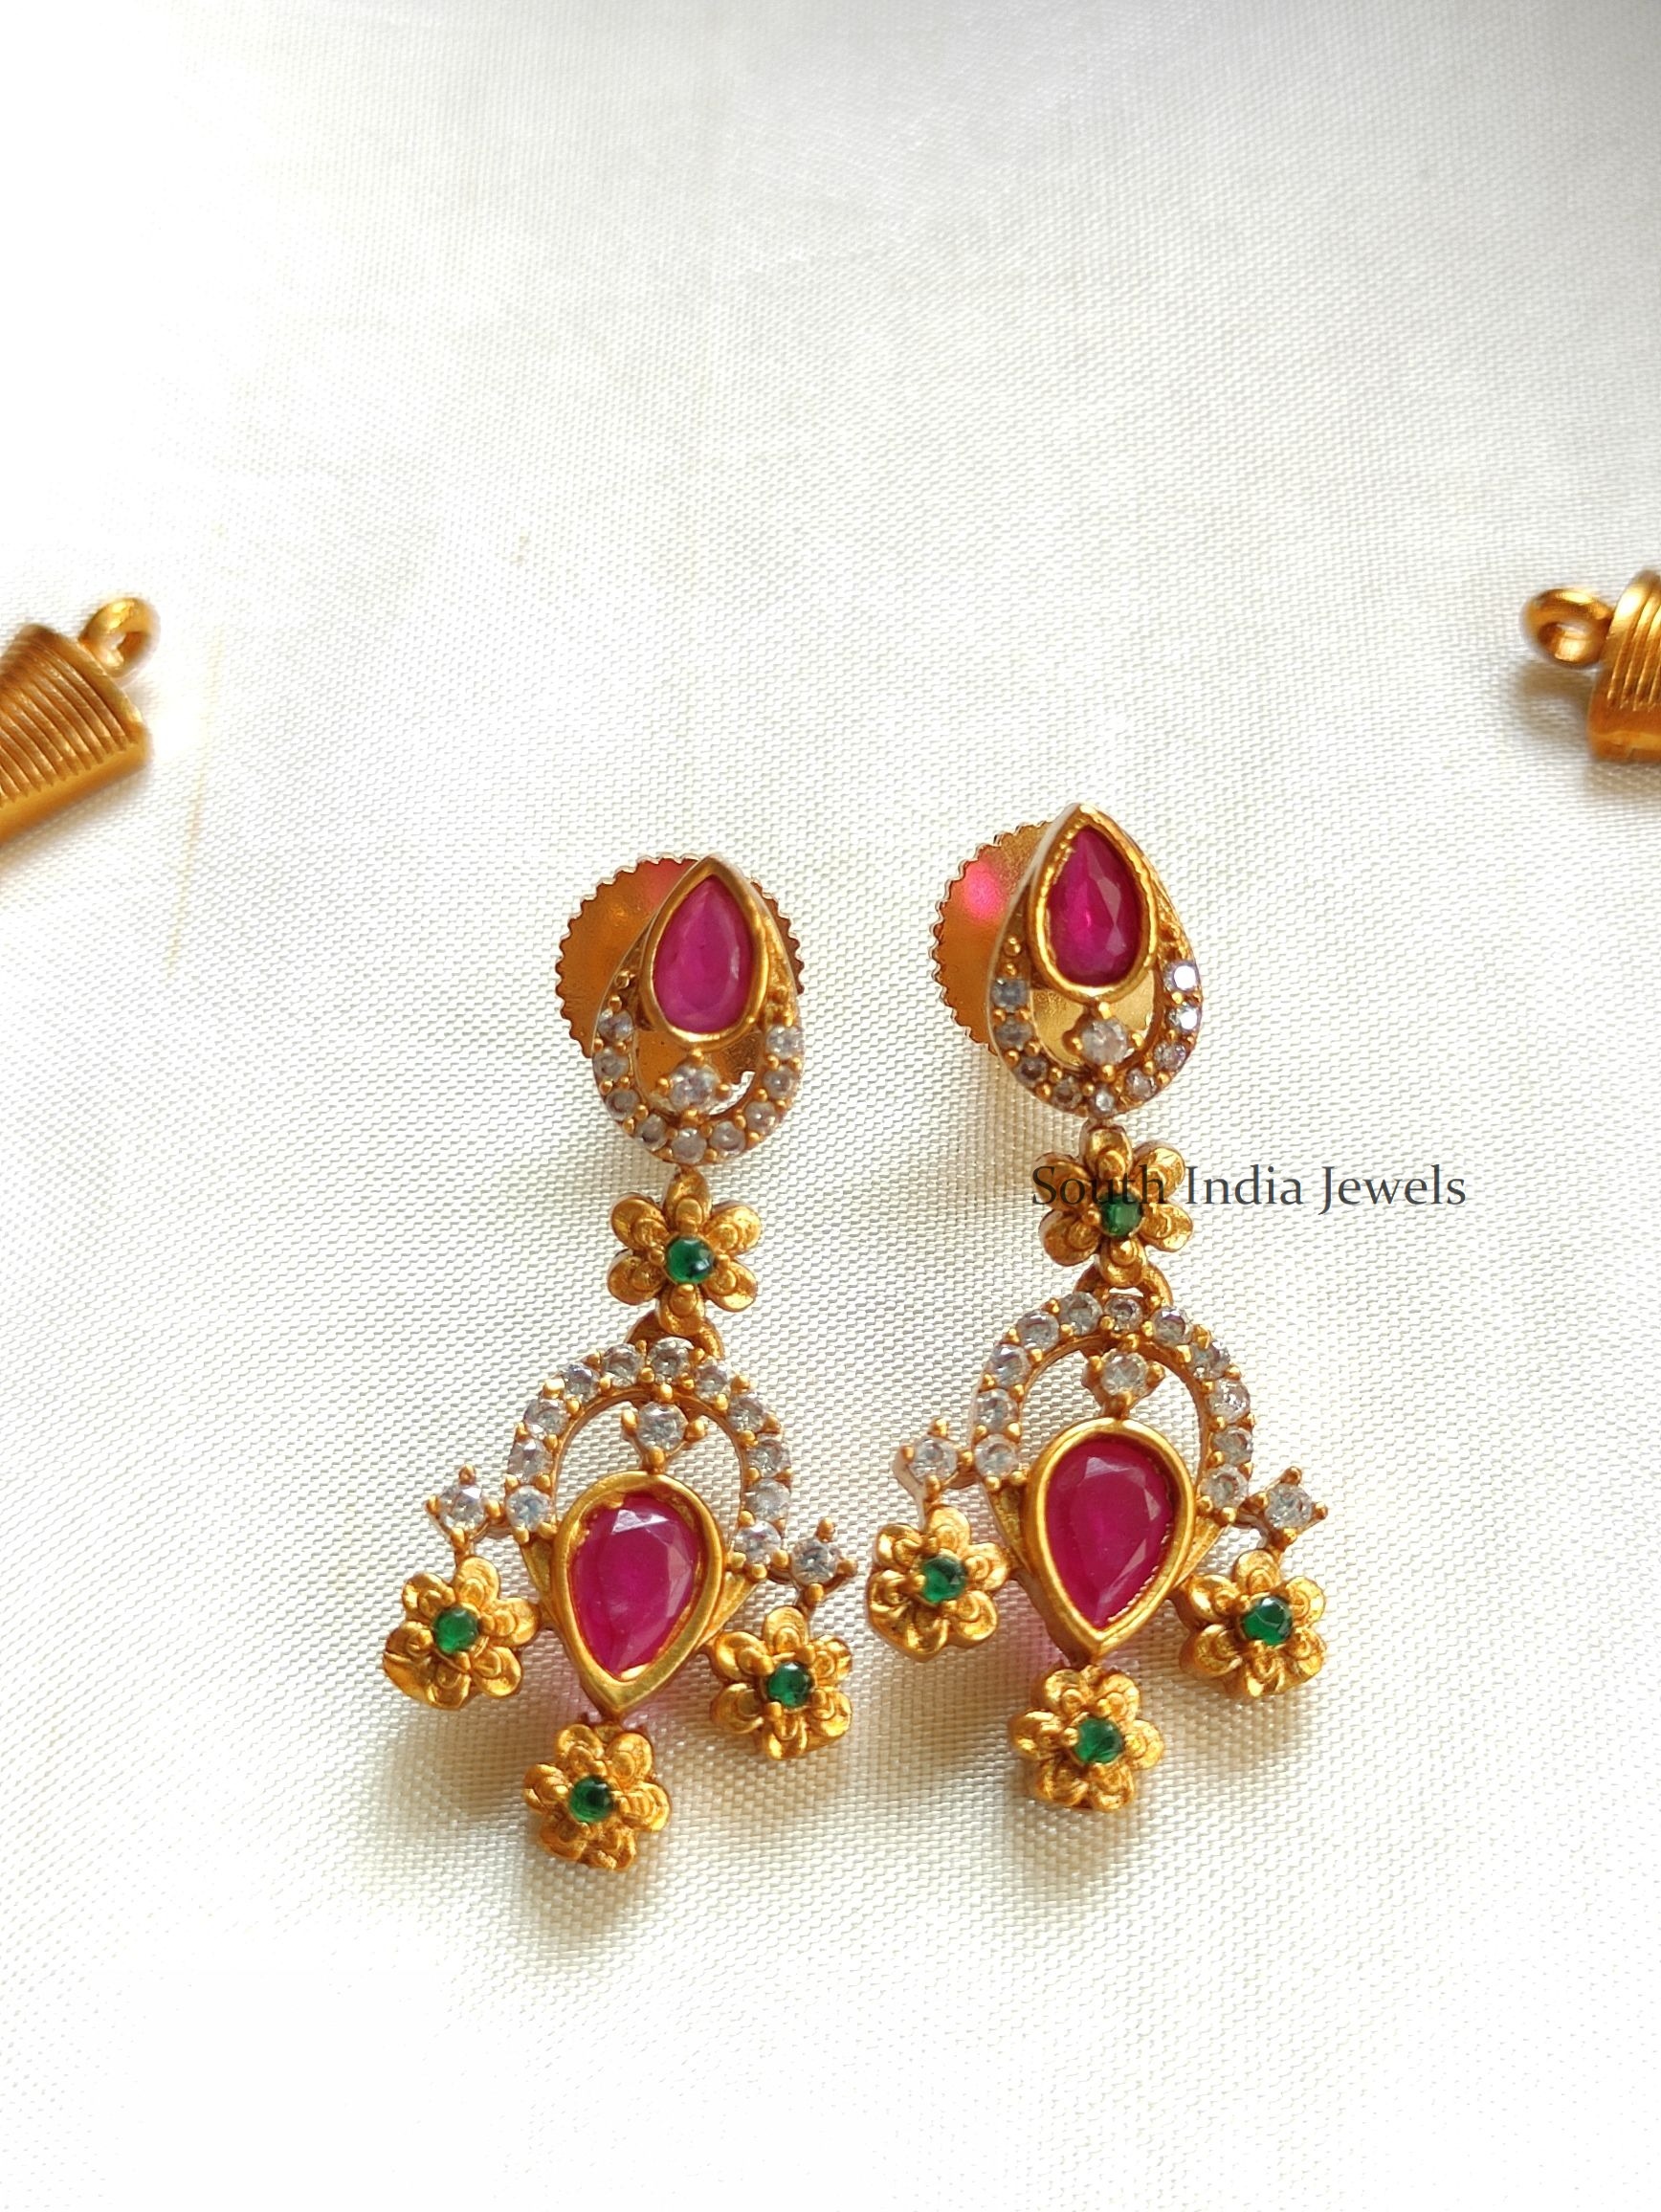 Elegant Kemp Pearl Necklace - South India Jewels